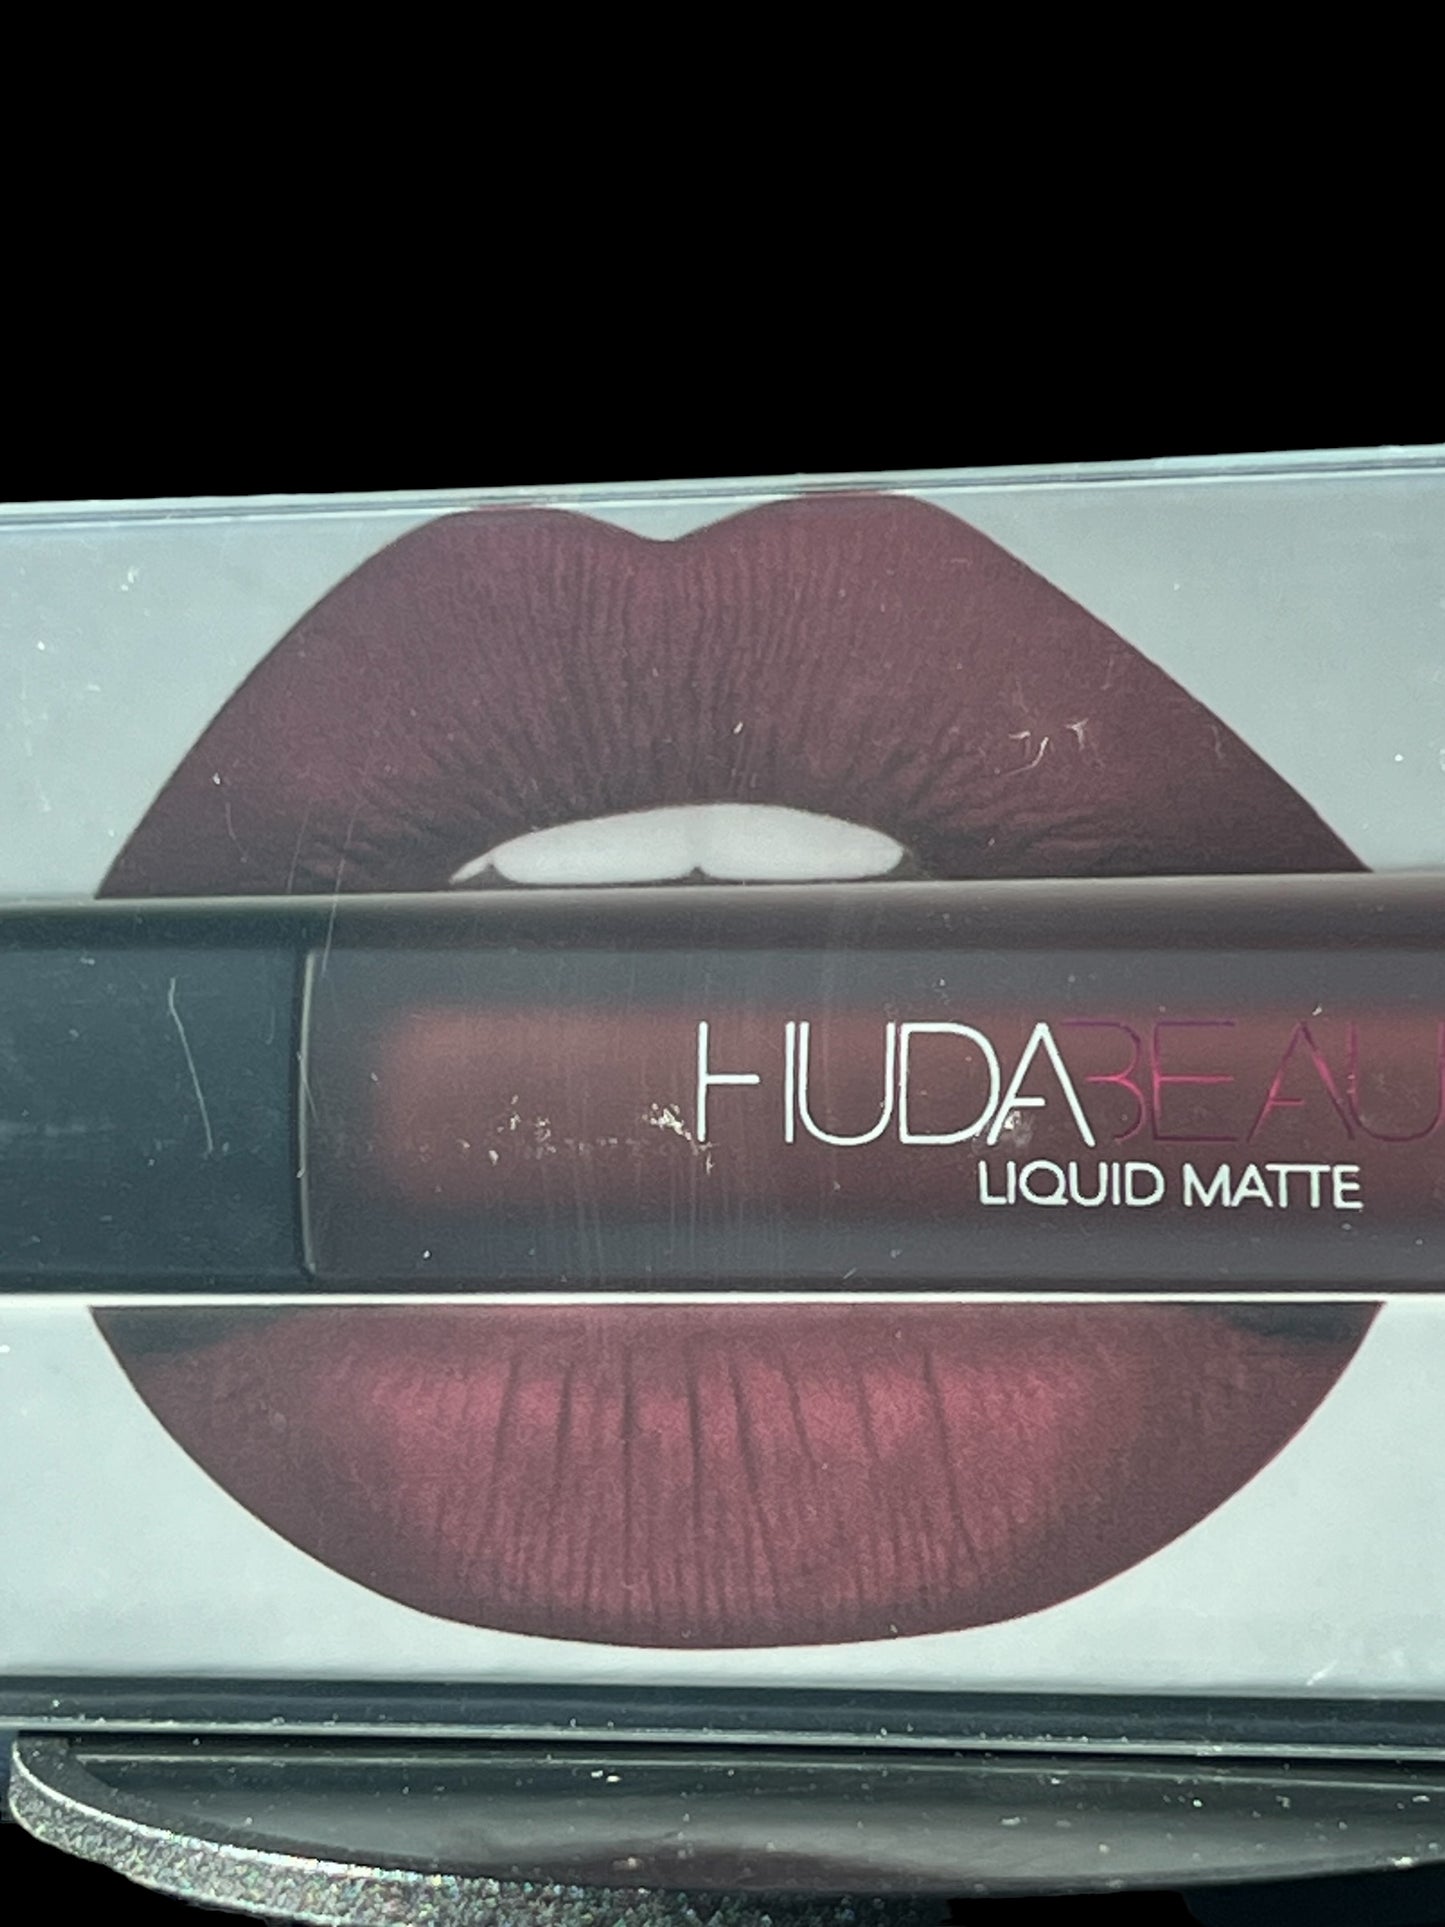 Huda Beauty Transfer Proof Liquid Lipstick in FIRST CLASS